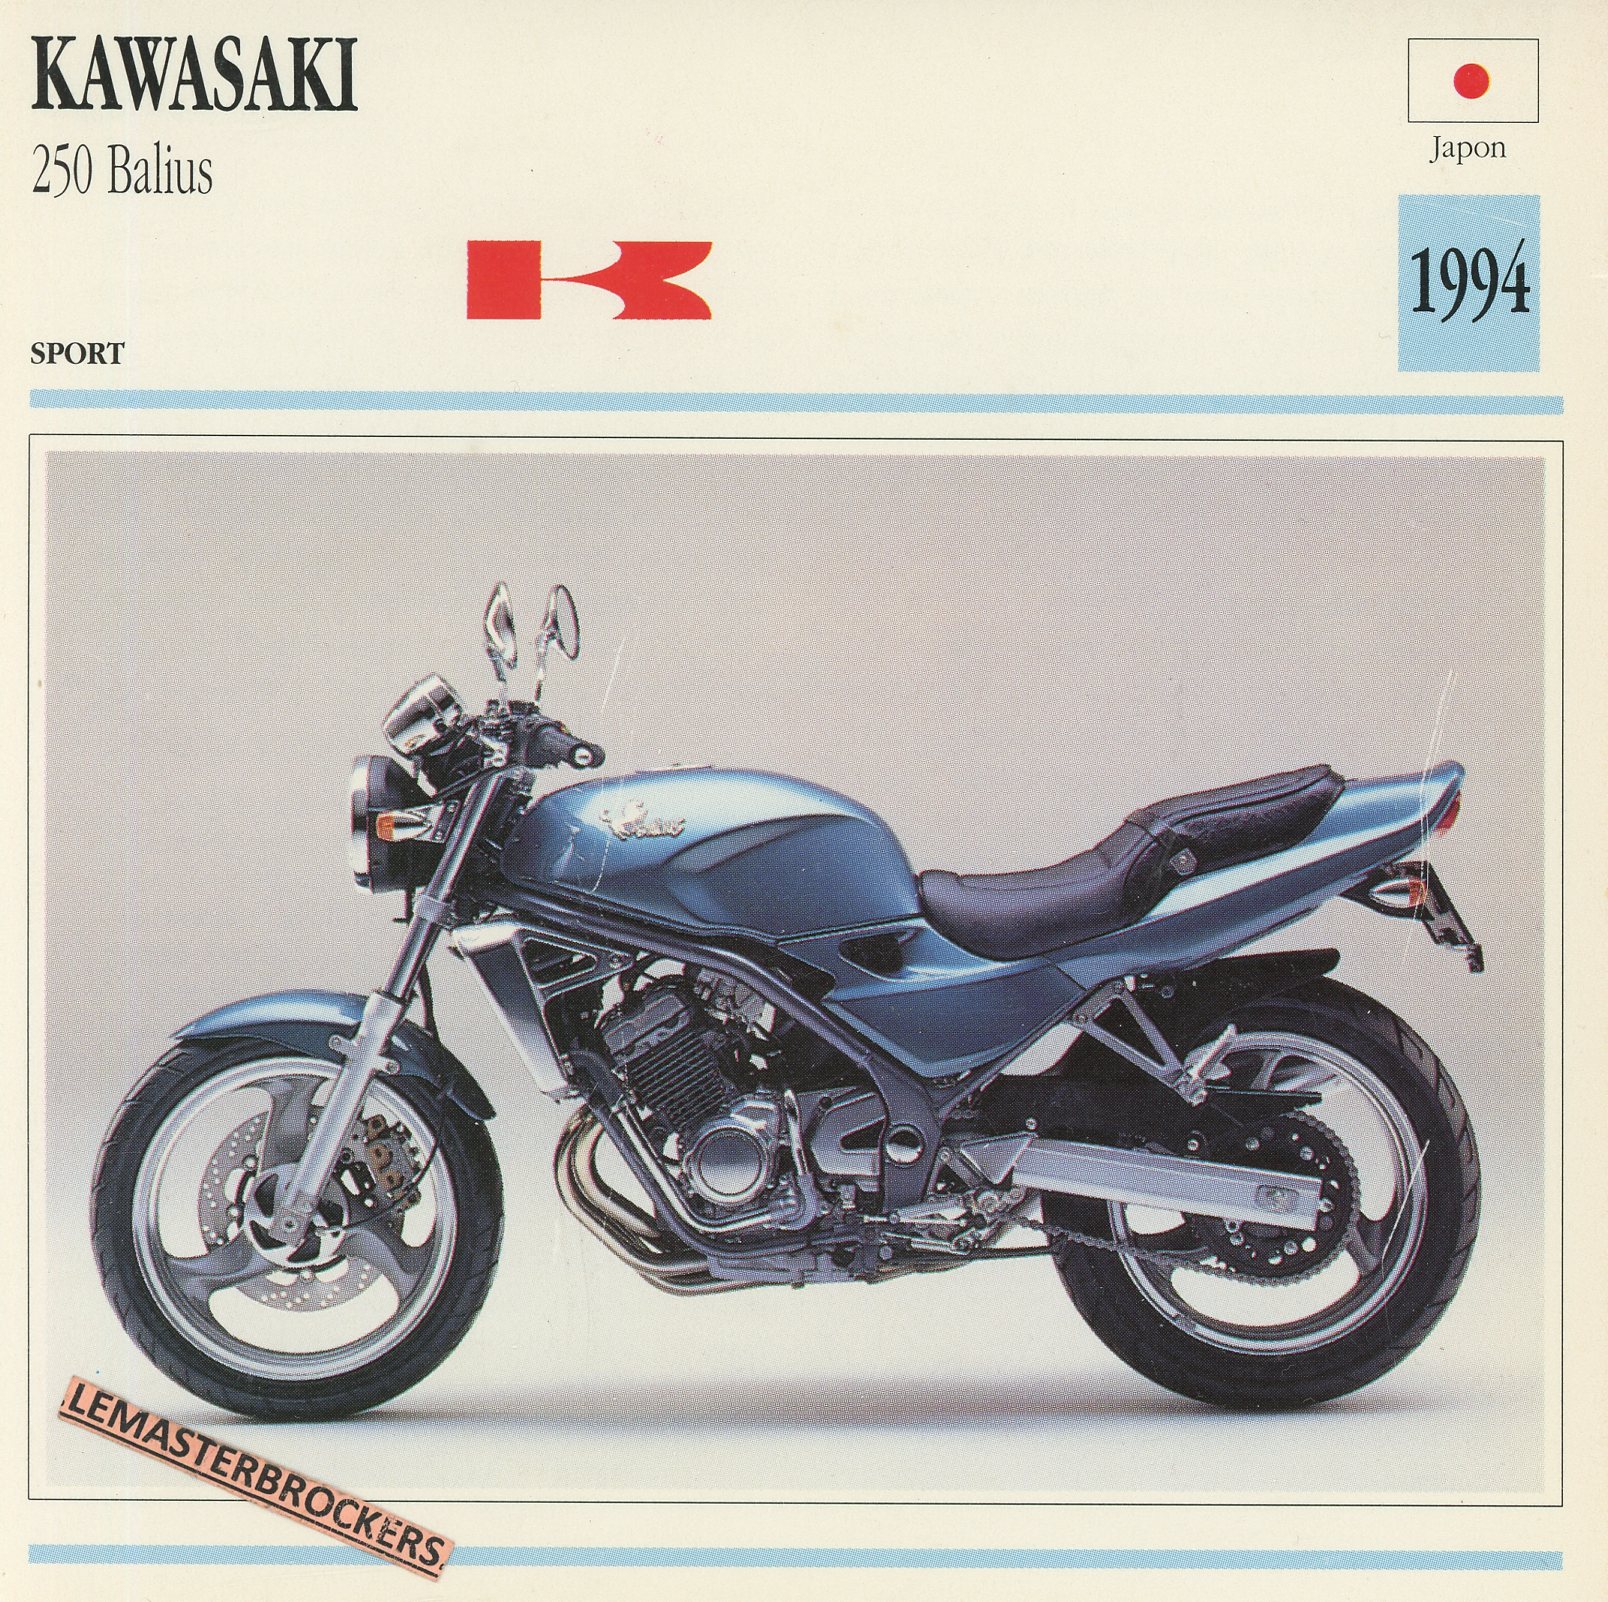 KAWASAKI-250-BALIUS-1994-FICHE-MOTO-LEMASTERBROCKERS